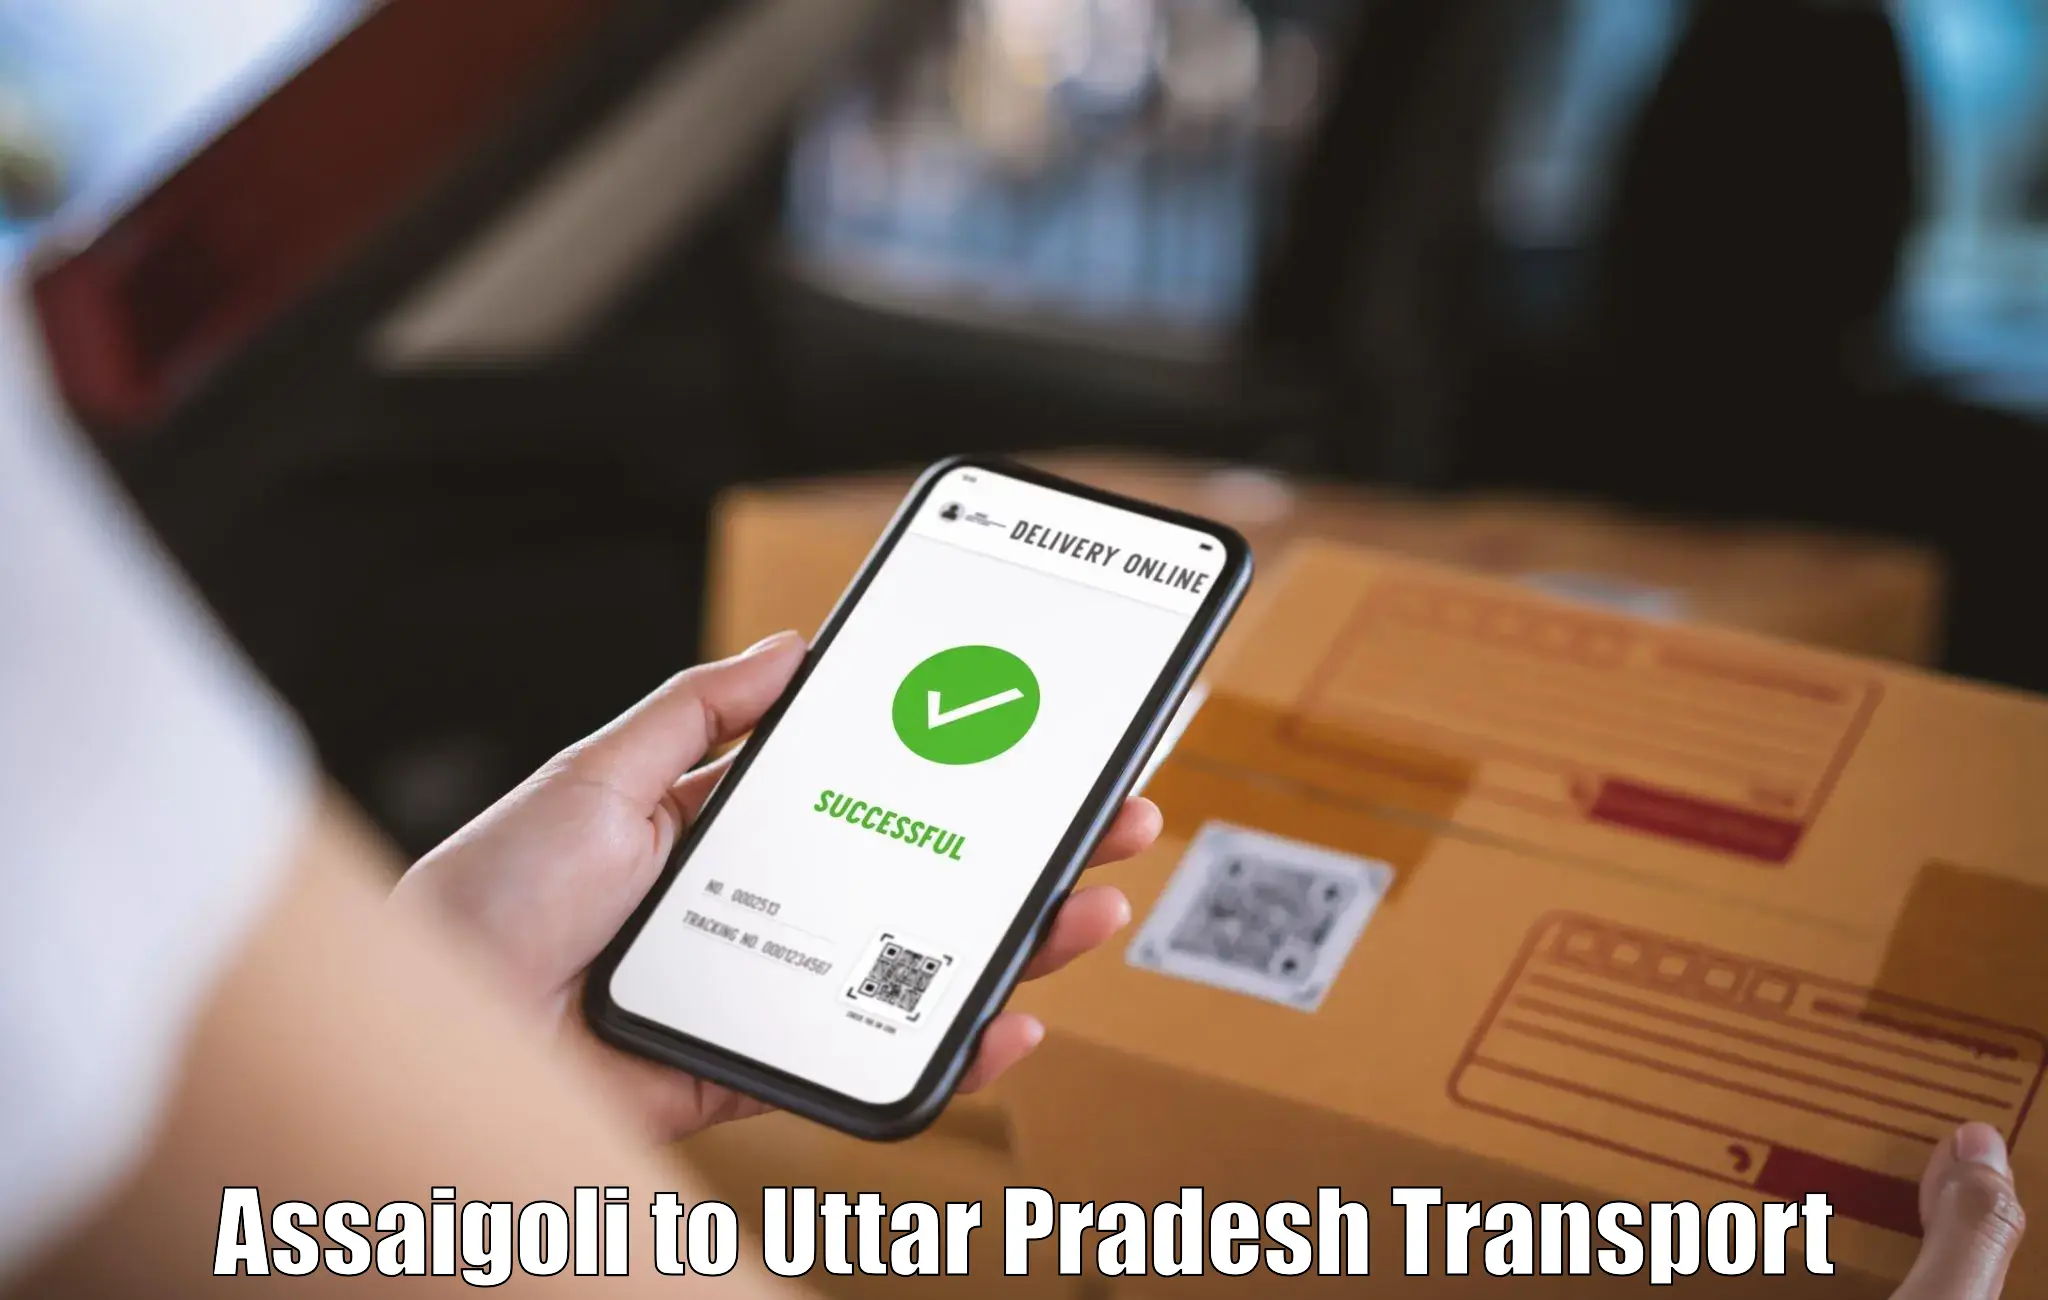 India truck logistics services Assaigoli to Uttar Pradesh